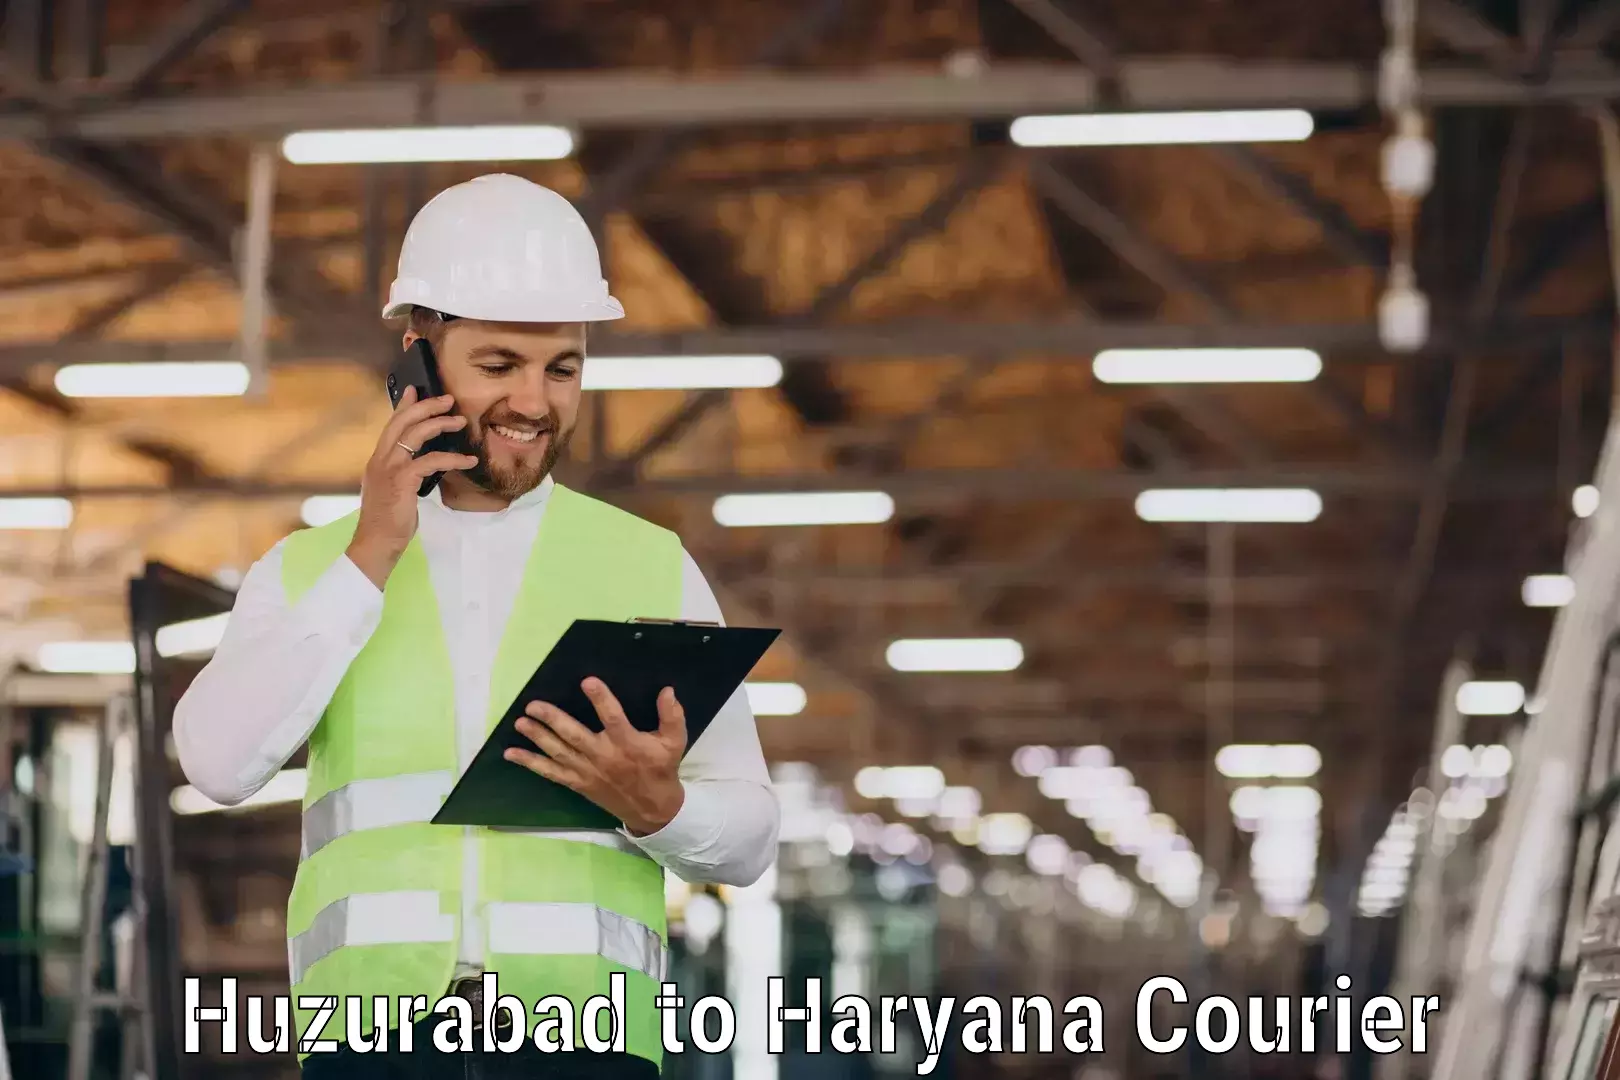 Enhanced tracking features Huzurabad to NCR Haryana